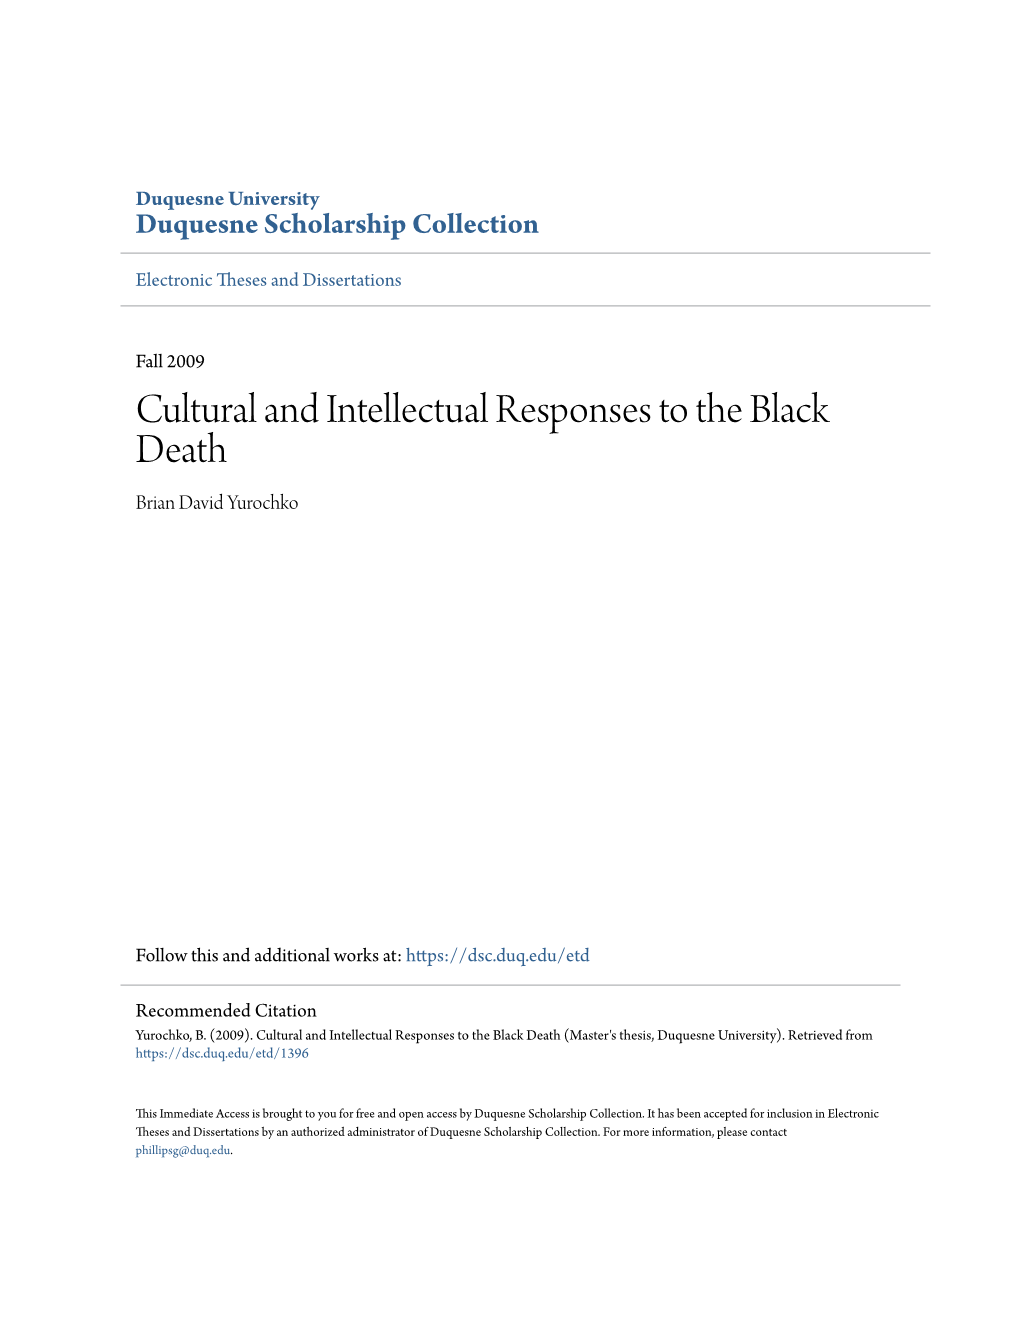 Cultural and Intellectual Responses to the Black Death Brian David Yurochko